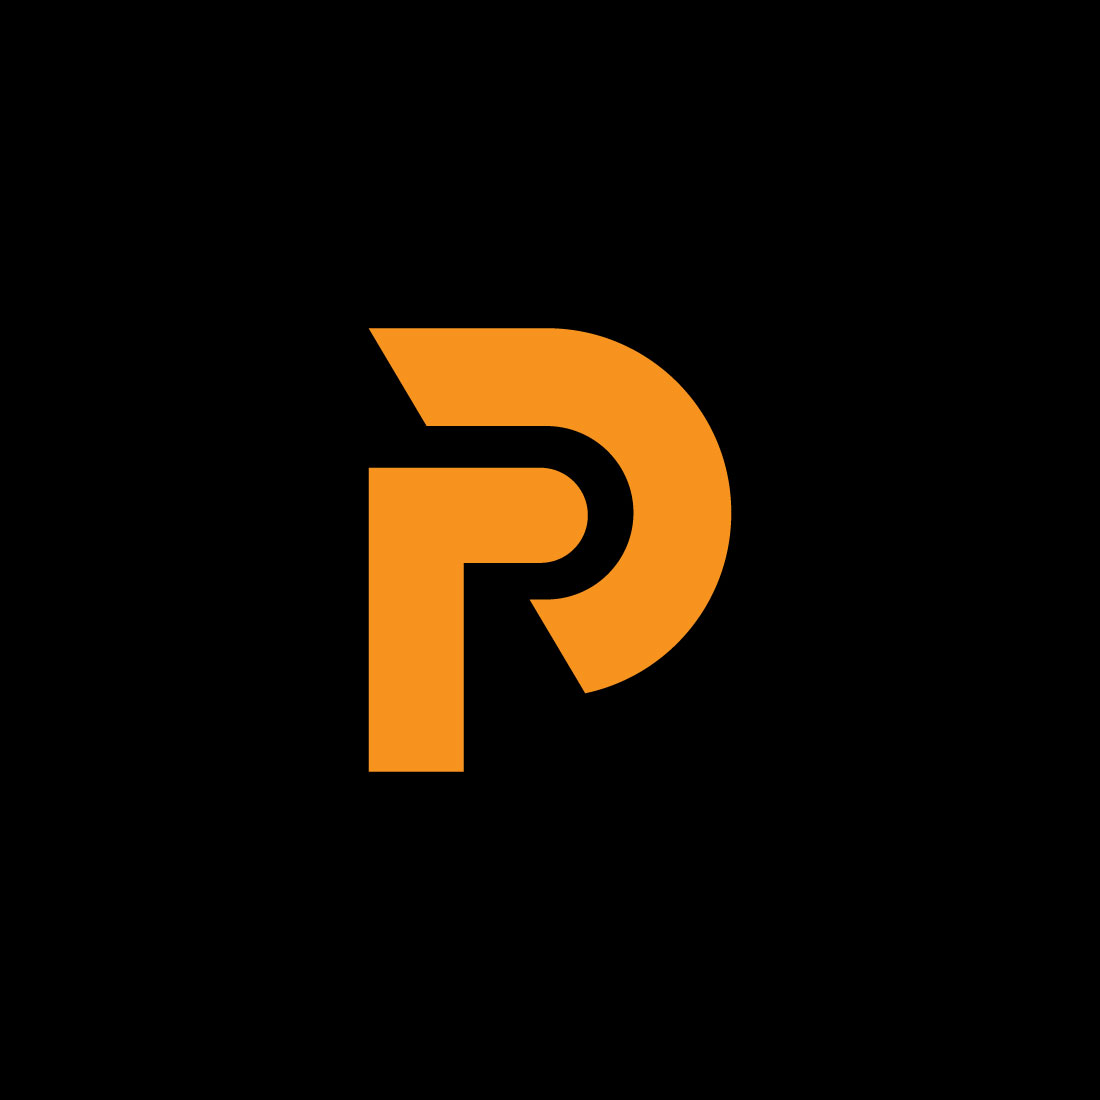 Simple Logo P Design Template cover image.